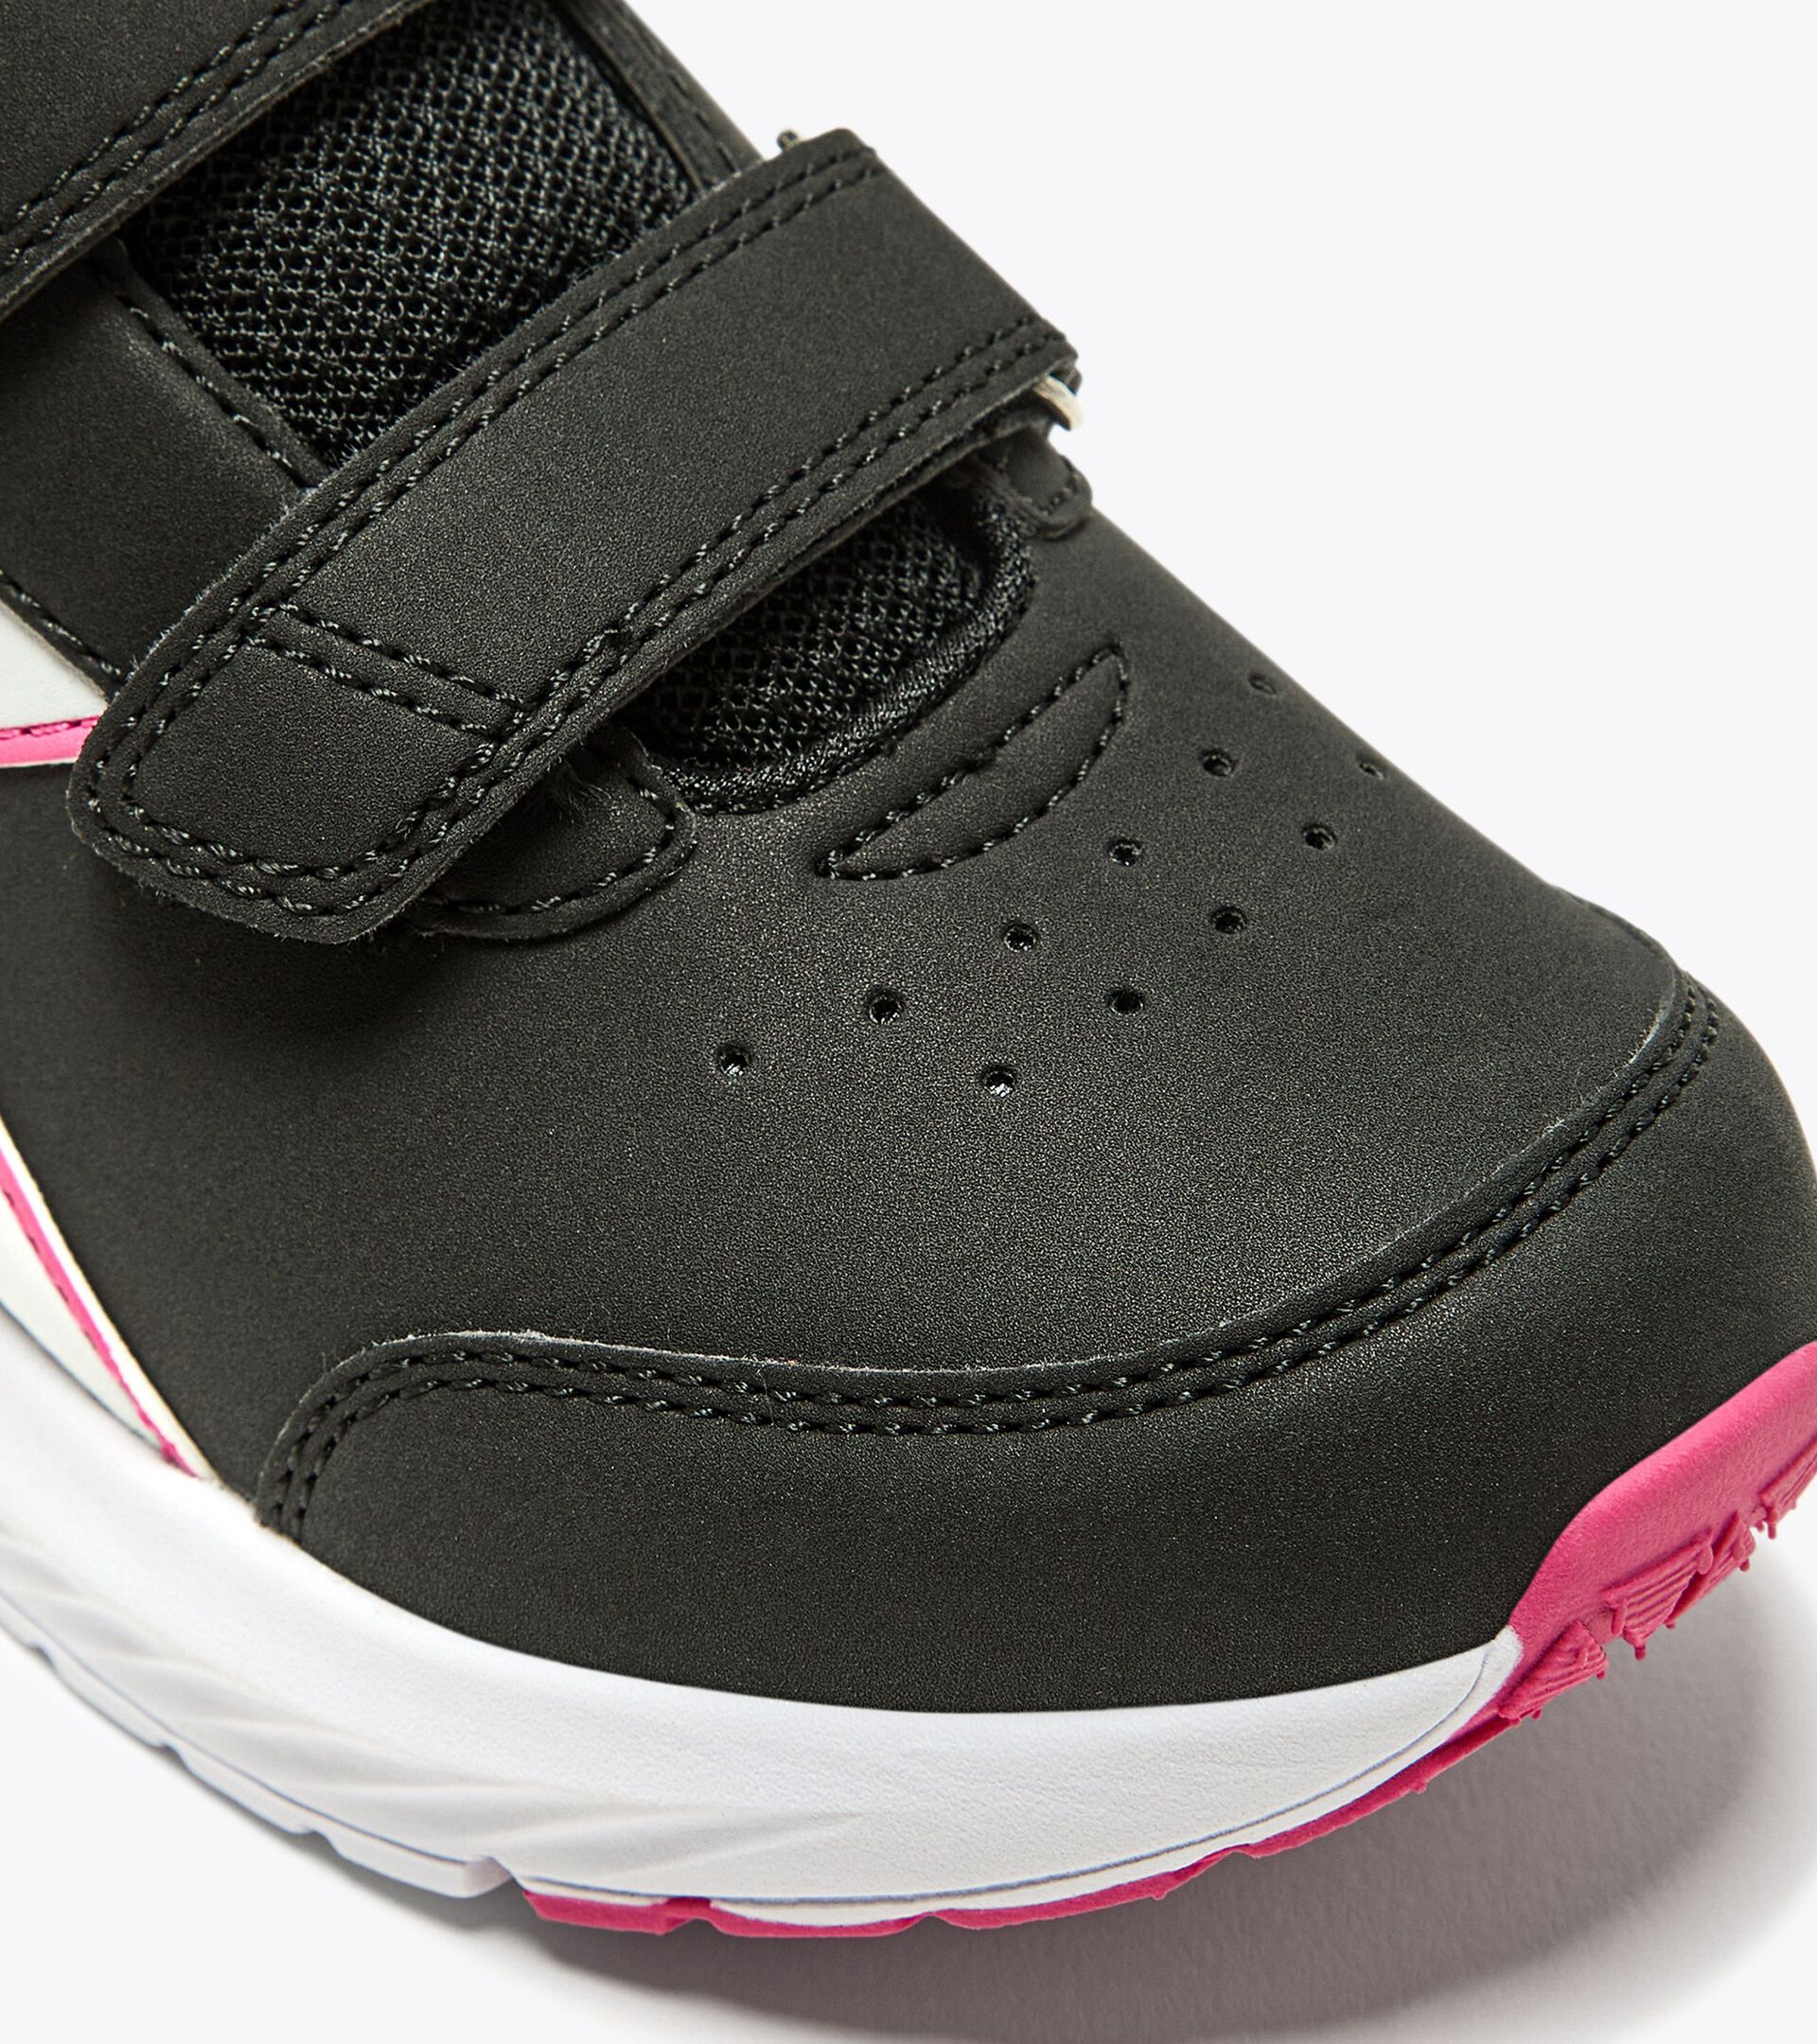 Sports shoe fod kids - 4 to 8 years - Gender Neutral FALCON 3 SL JR V BLACK/FUCHSIA PURPLE - Diadora